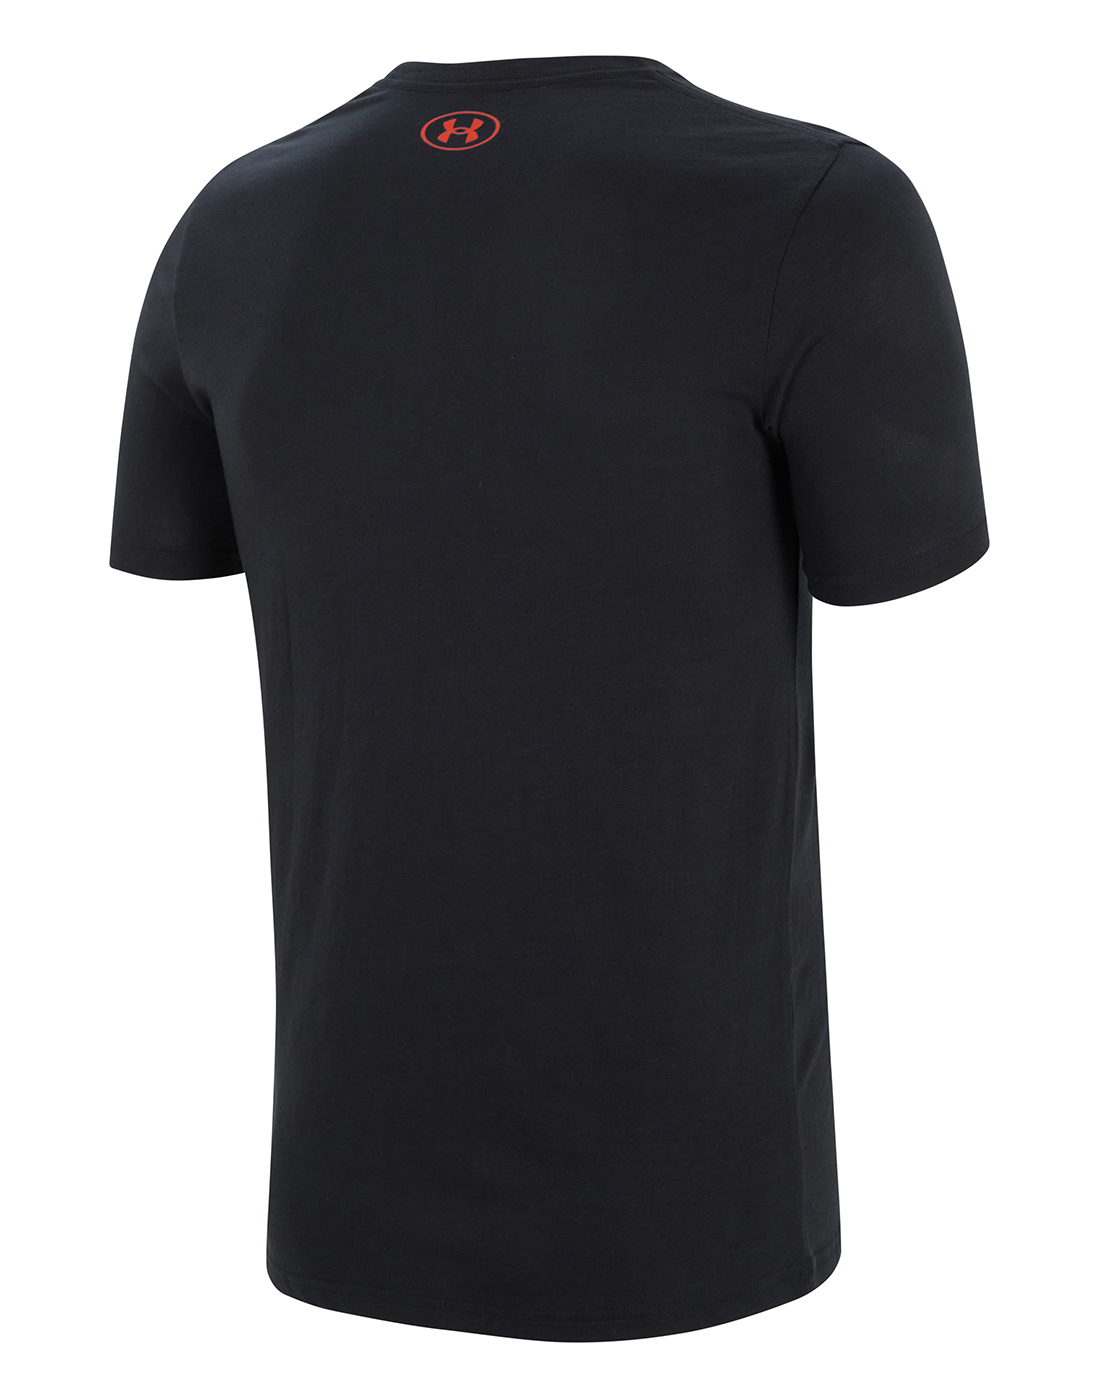 Under Armour Mens Multicolour Graphic T-Shirt - Black | Life Style ...